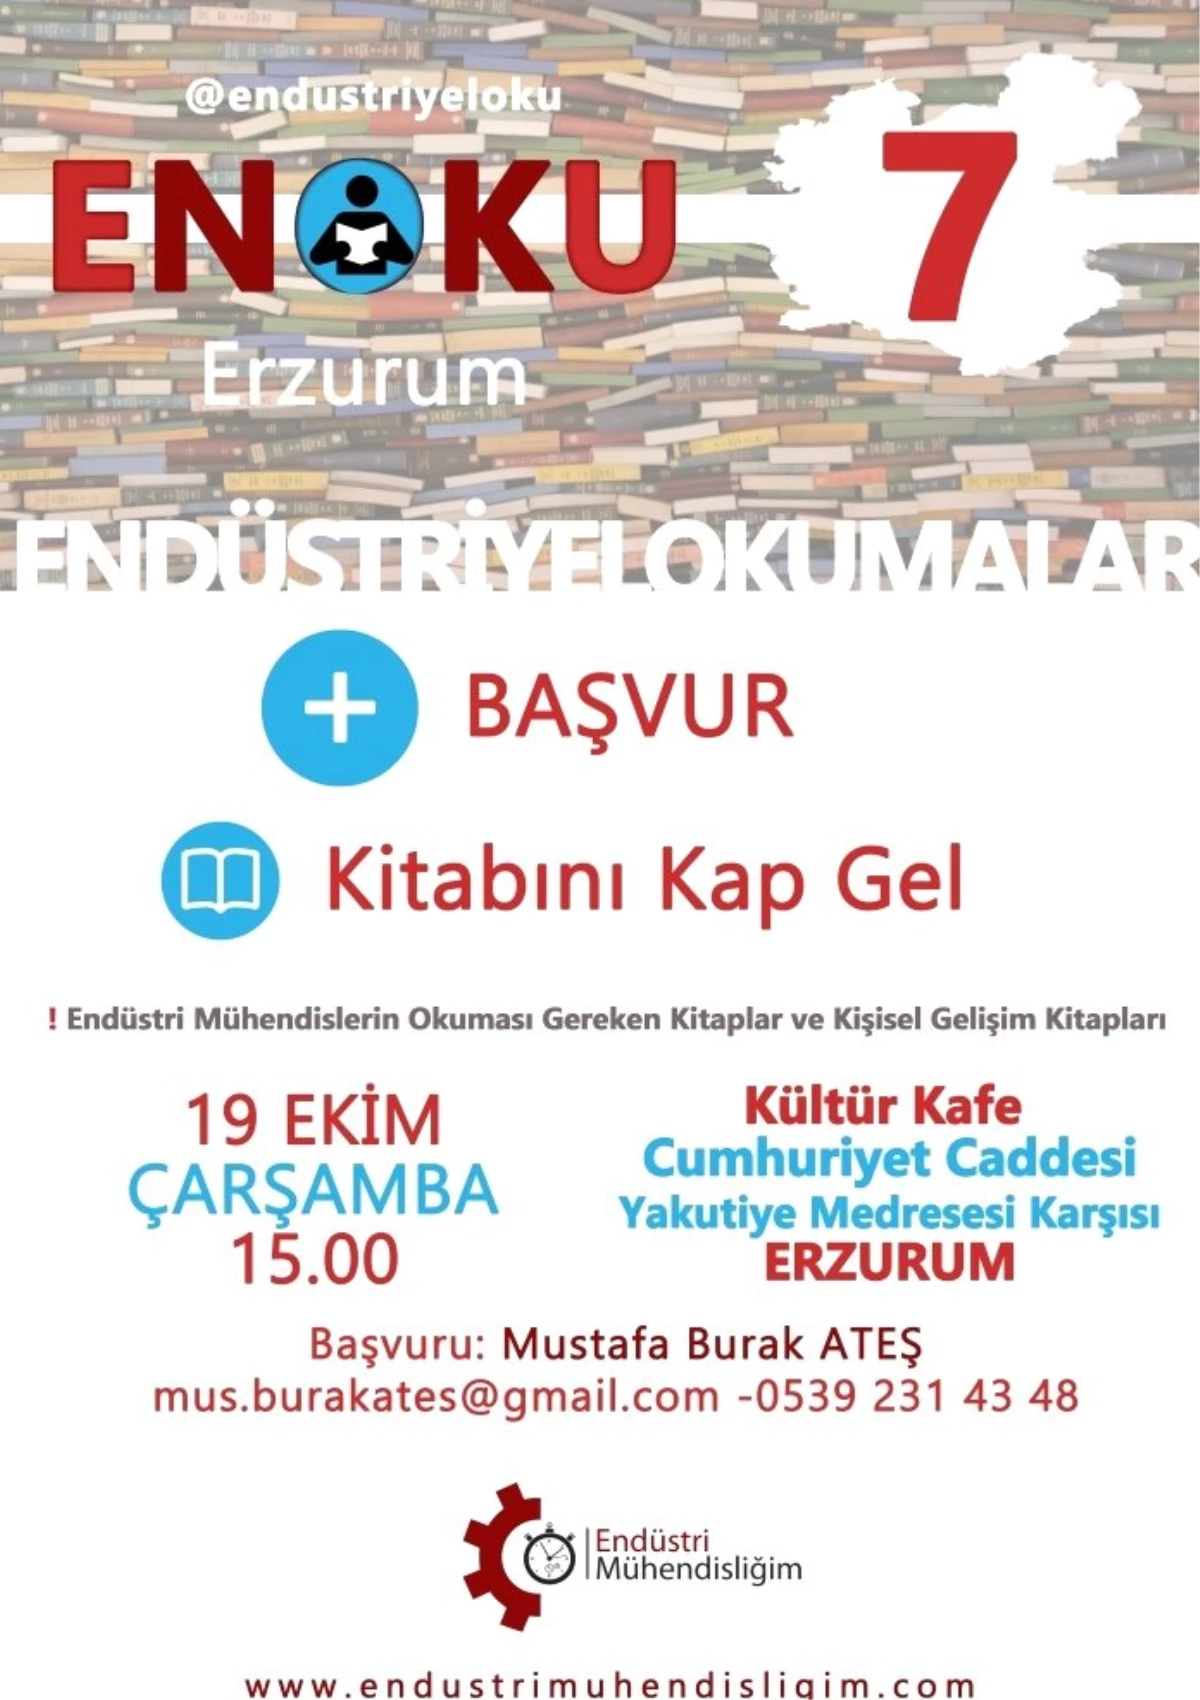 Endüstriyel Okumalar (Enoku) 7 - Erzurum